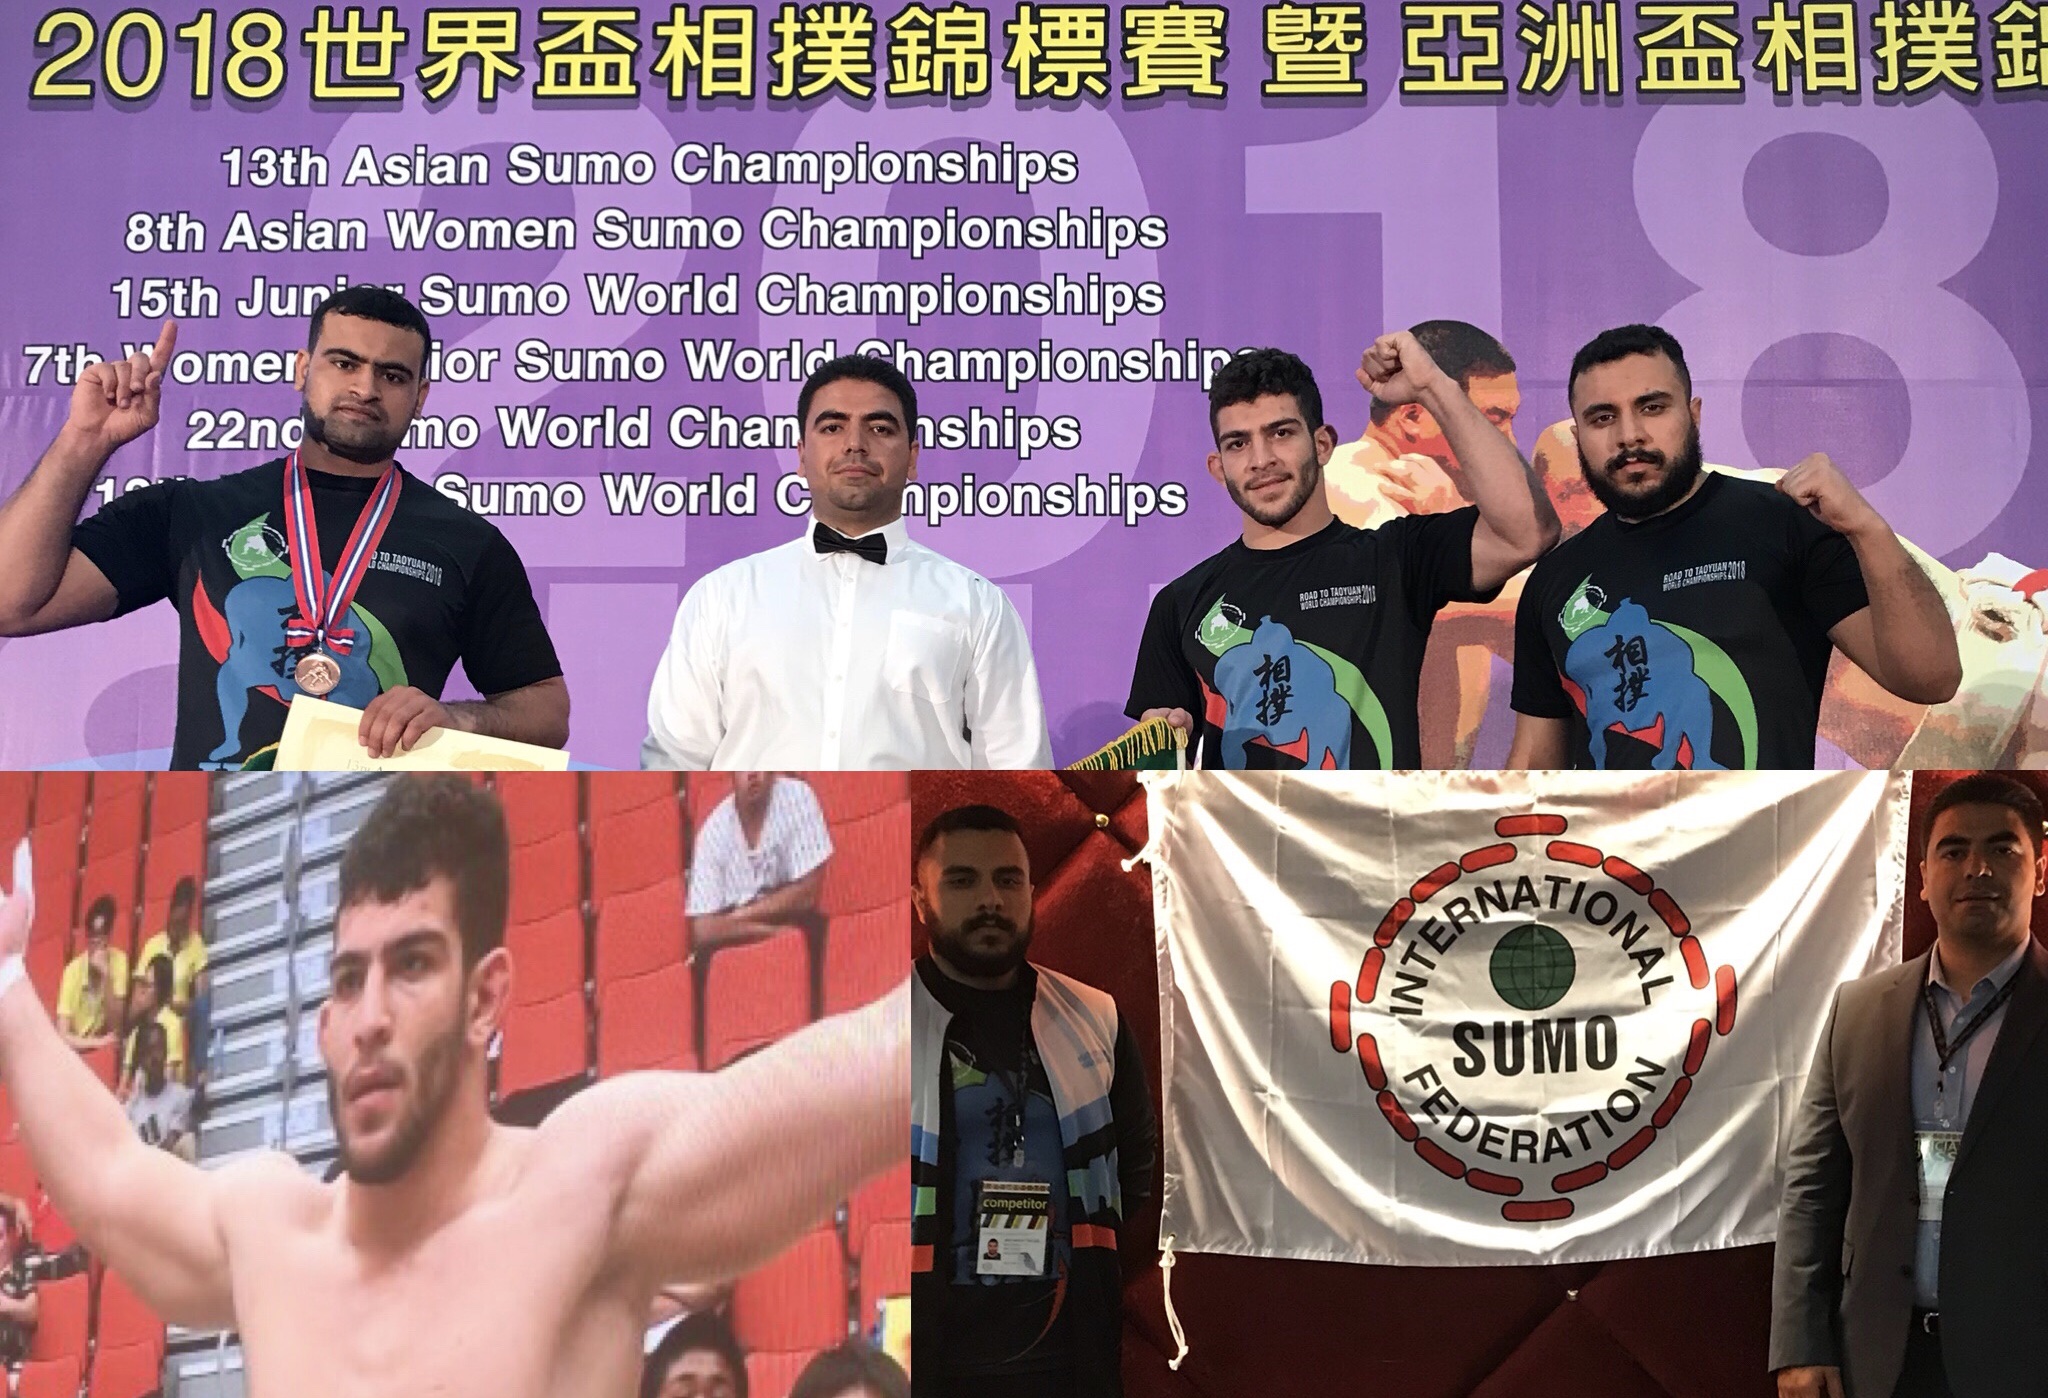 بیست و دومین دوره مسابقات قهرمانی سومو جهان - تائویوان چین تایپه 2018